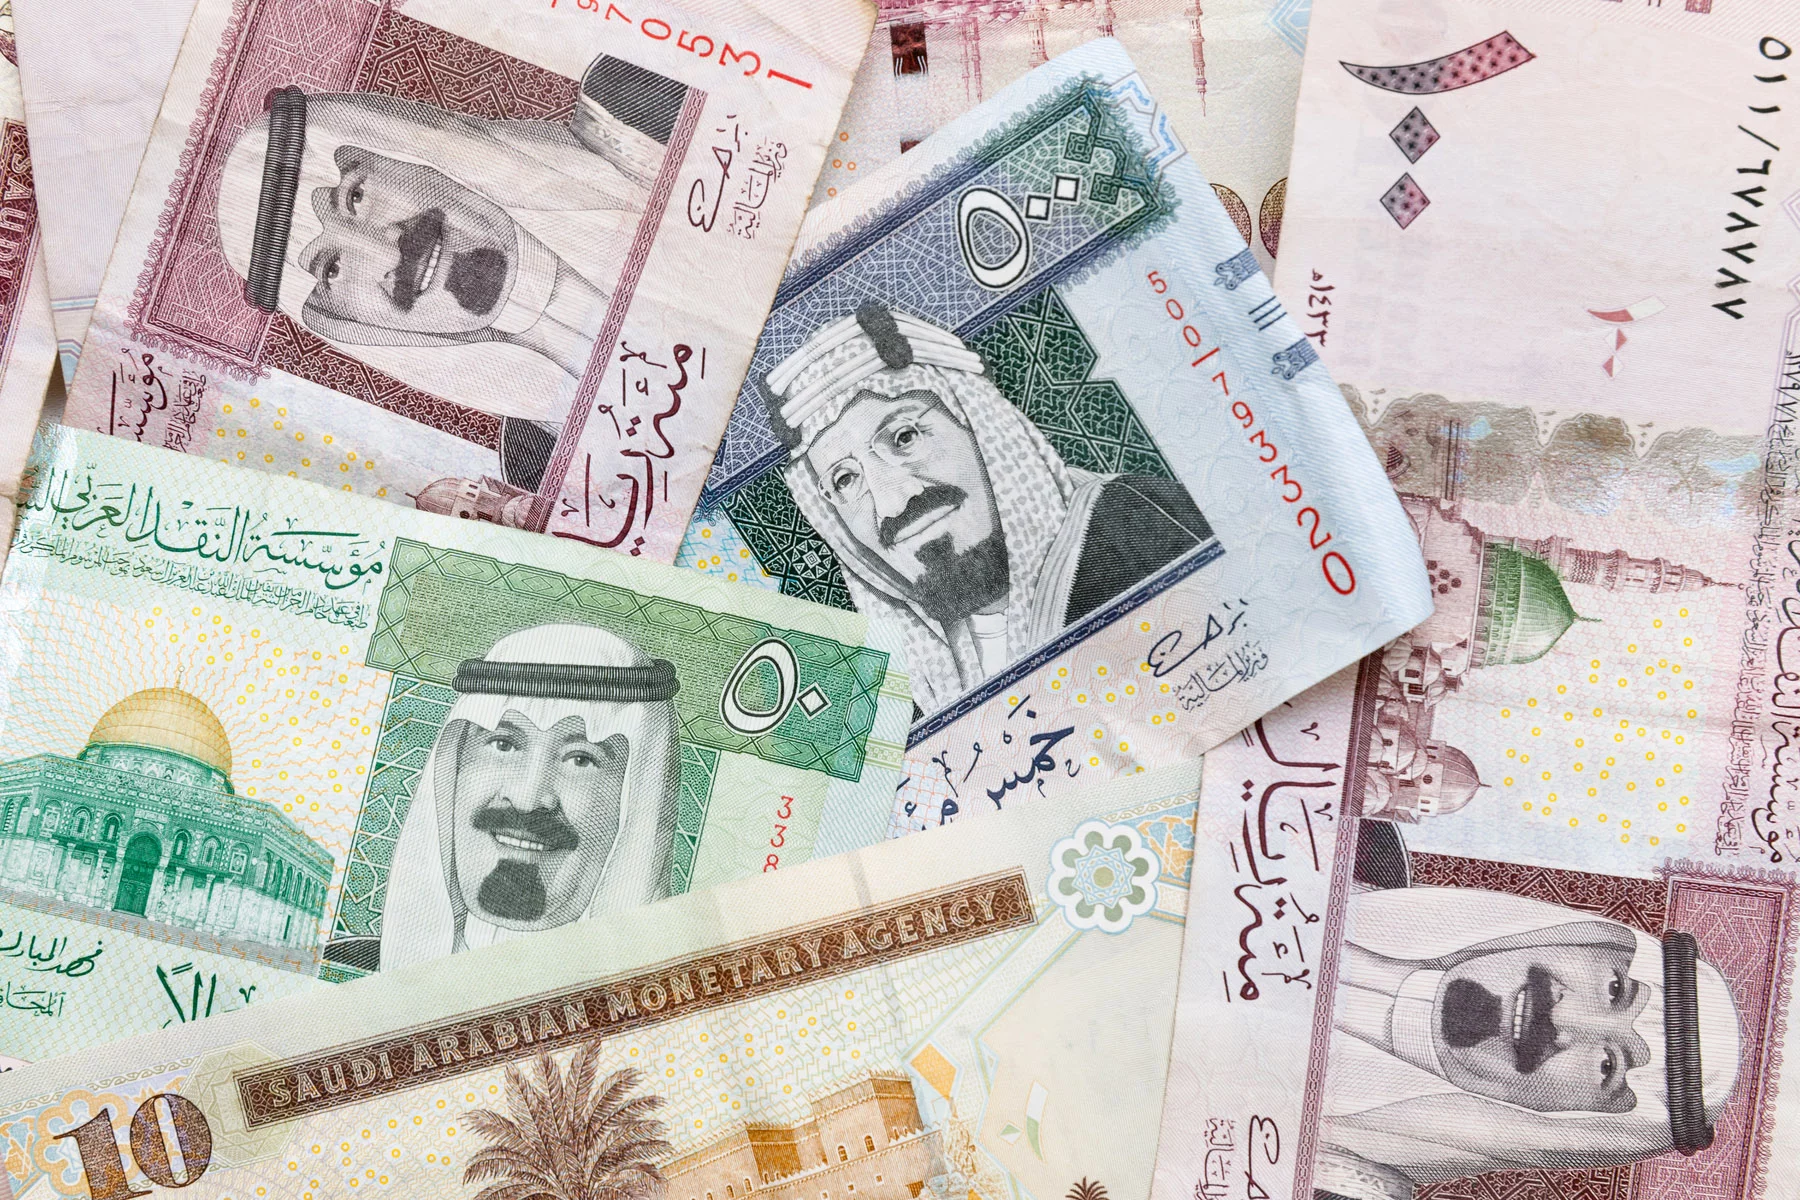 The currency of Saudi Arabia